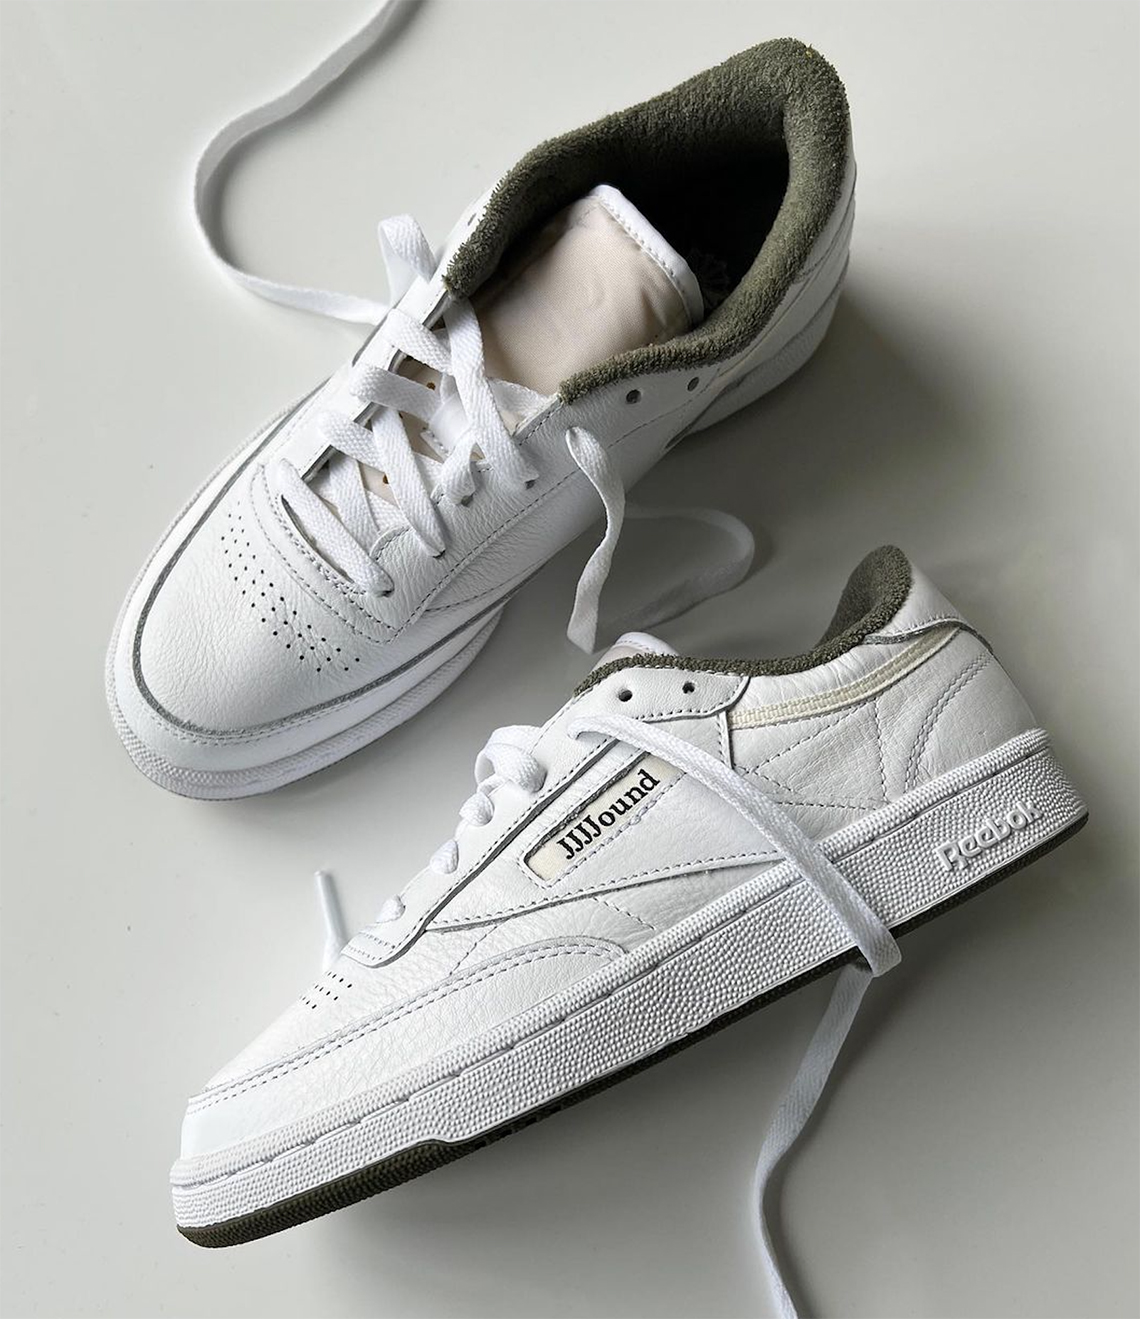 Sinfonía Delegación Mascotas JJJJound x Reebok Club C "White/Olive" Release Date | Sneaker News